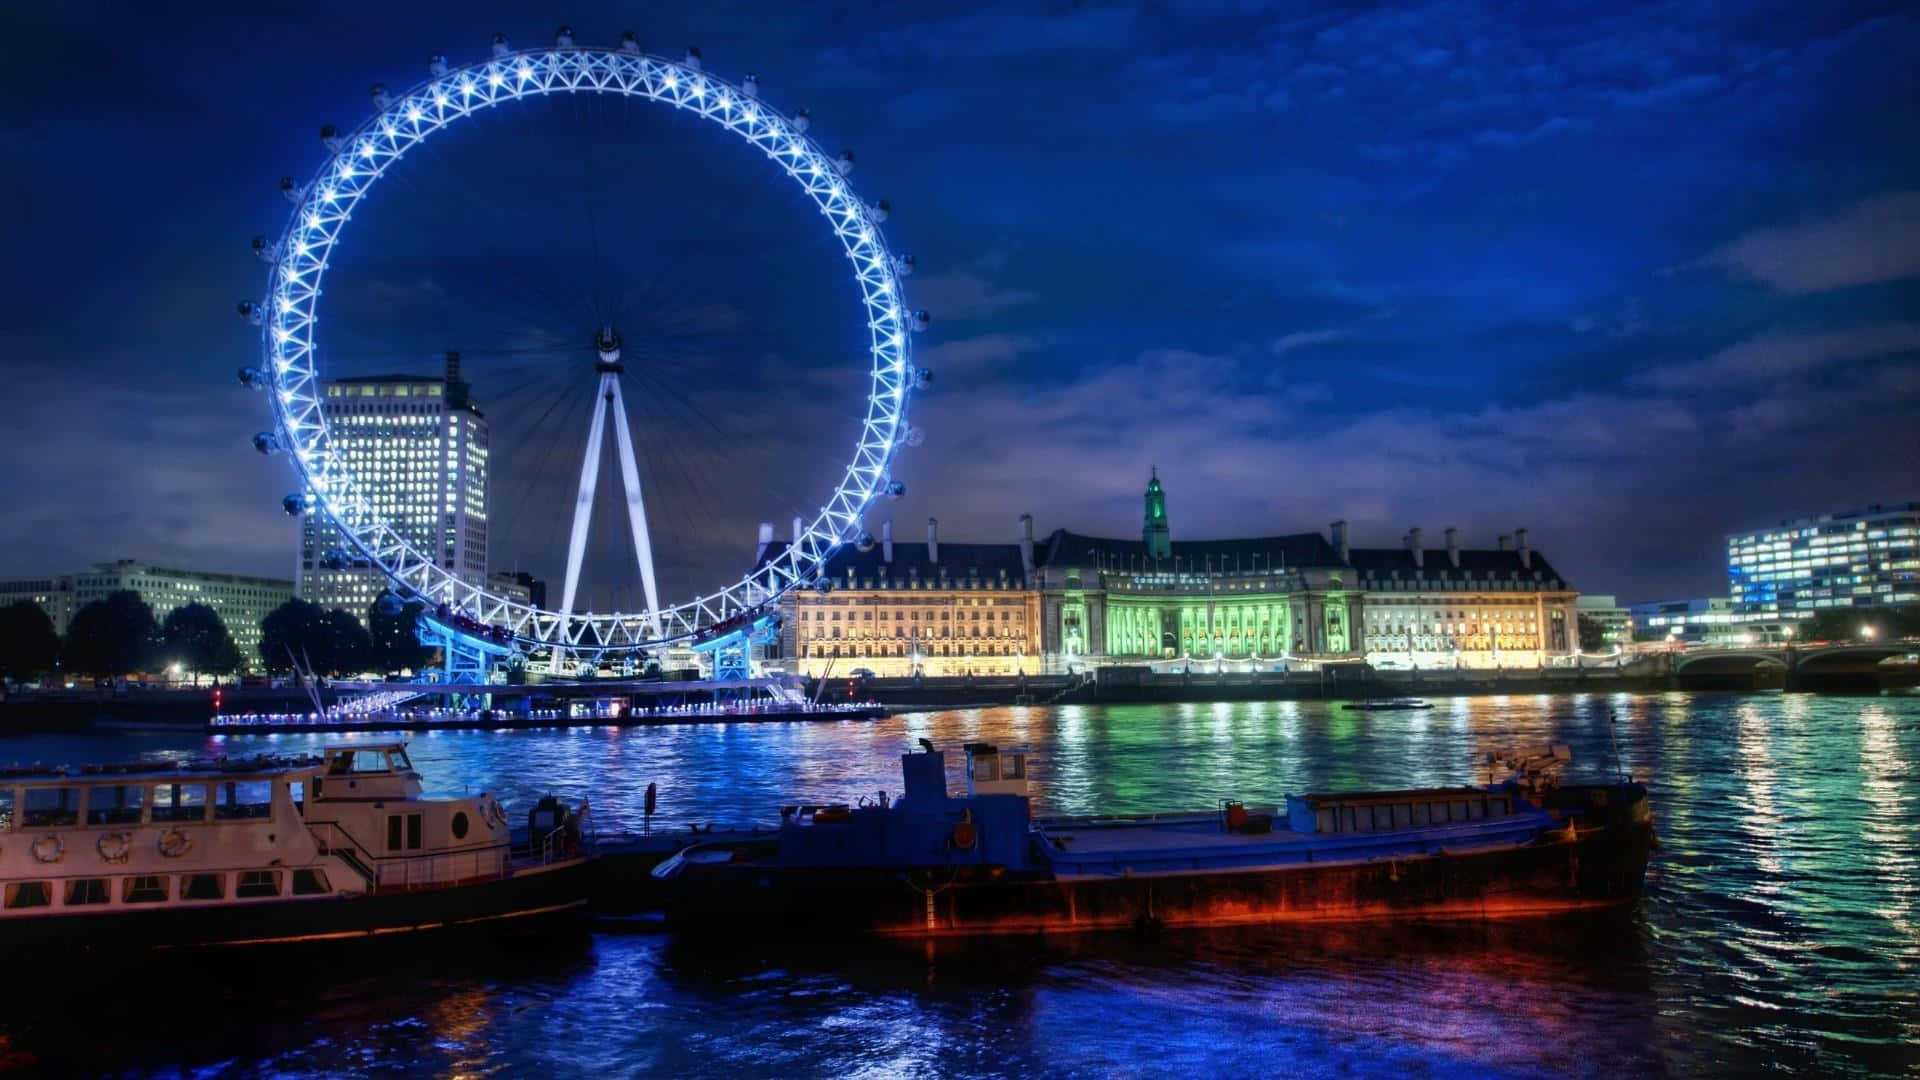 London Eye Wheel In England Picture